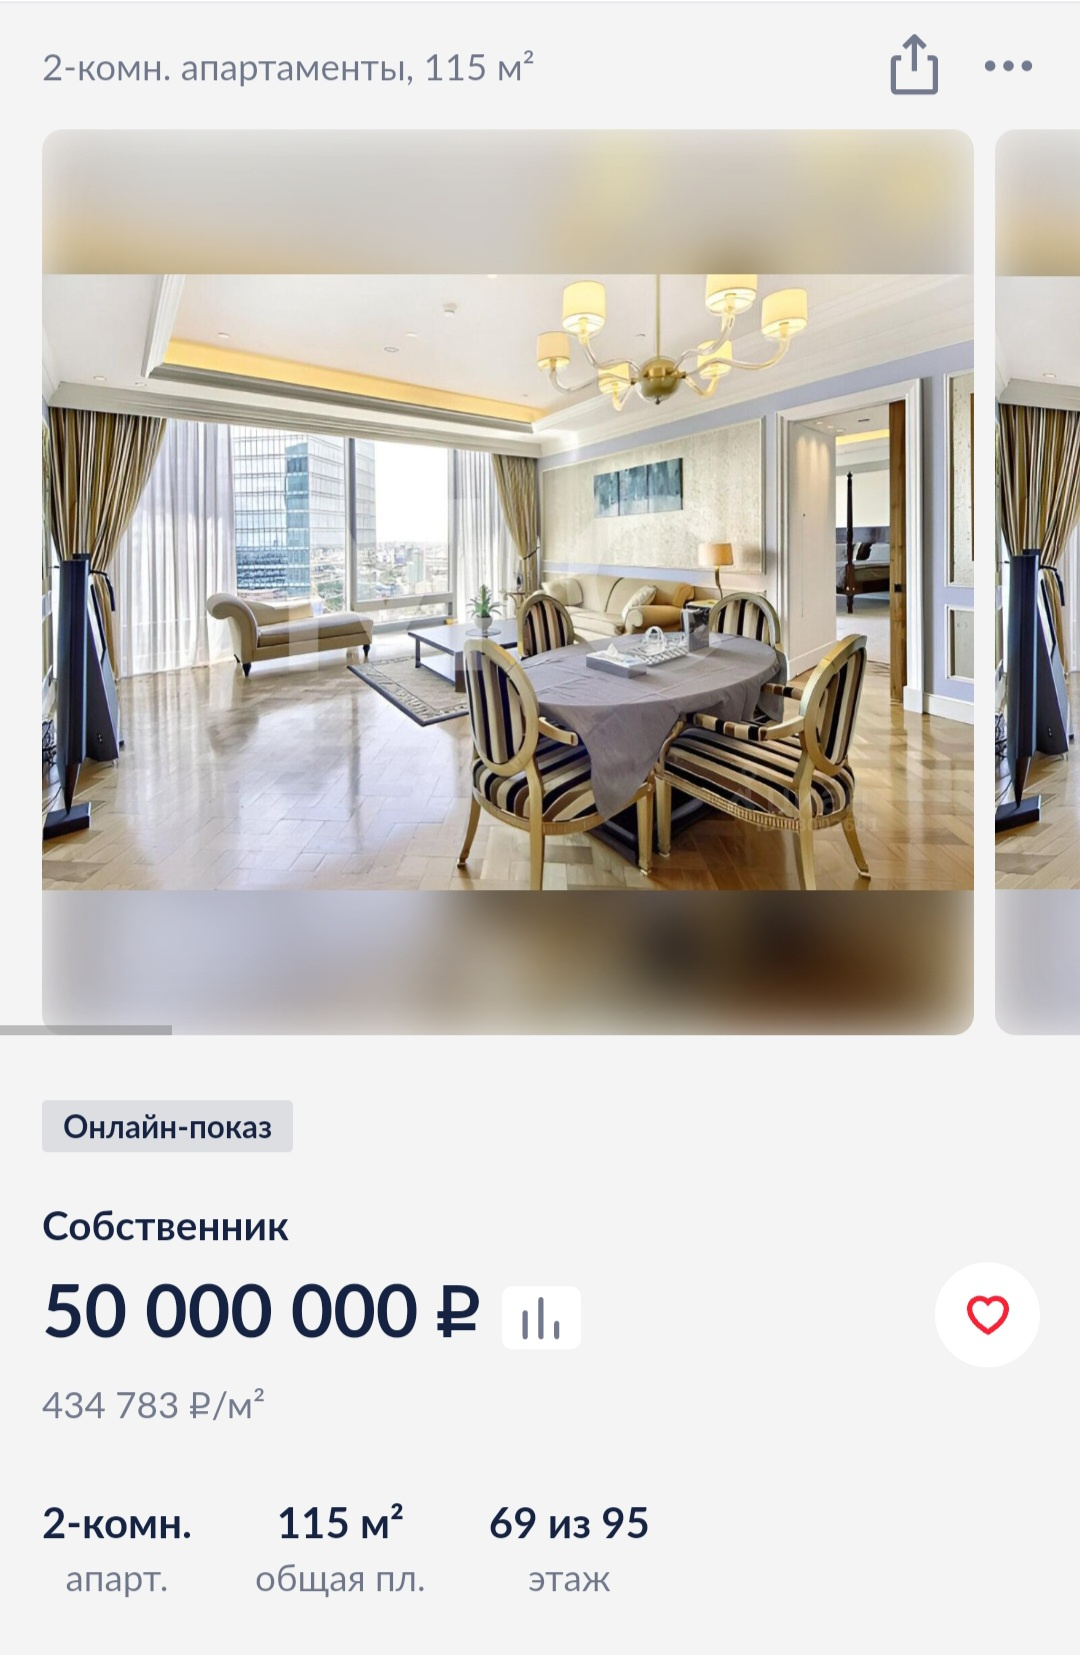 Цена апартаментов на 69-м этаже башни